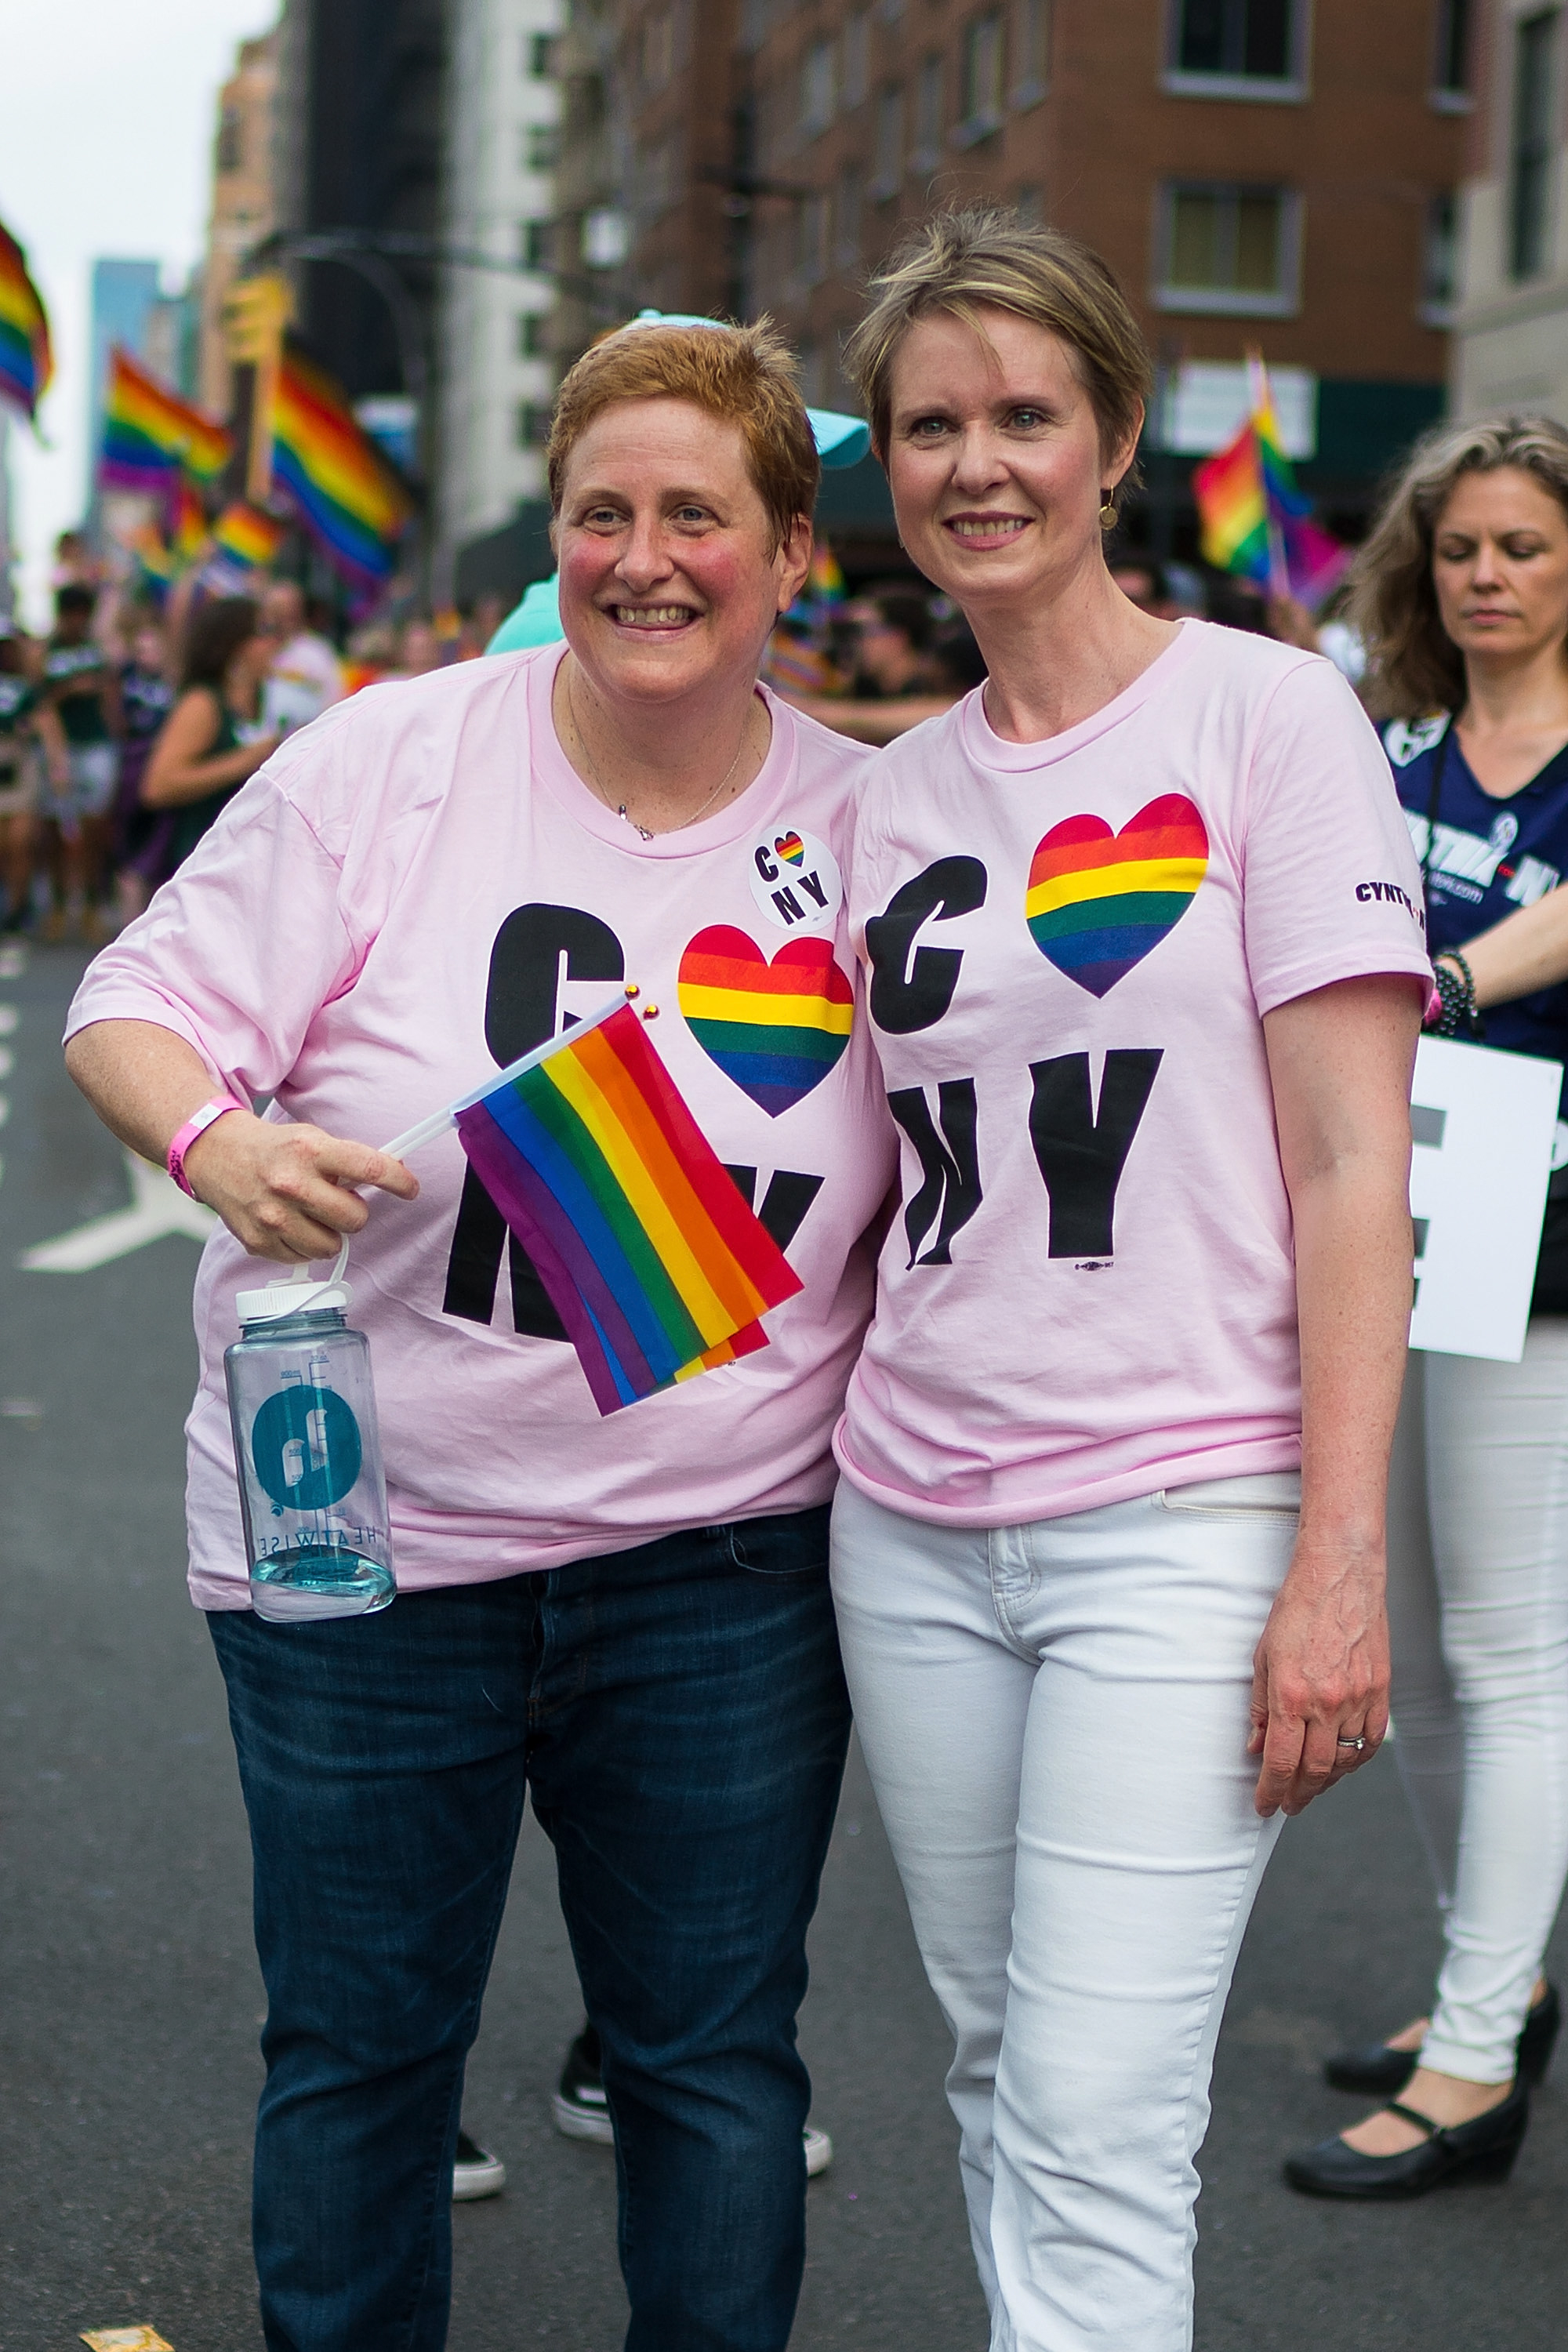 Cynthia and Christine at a Pride parade